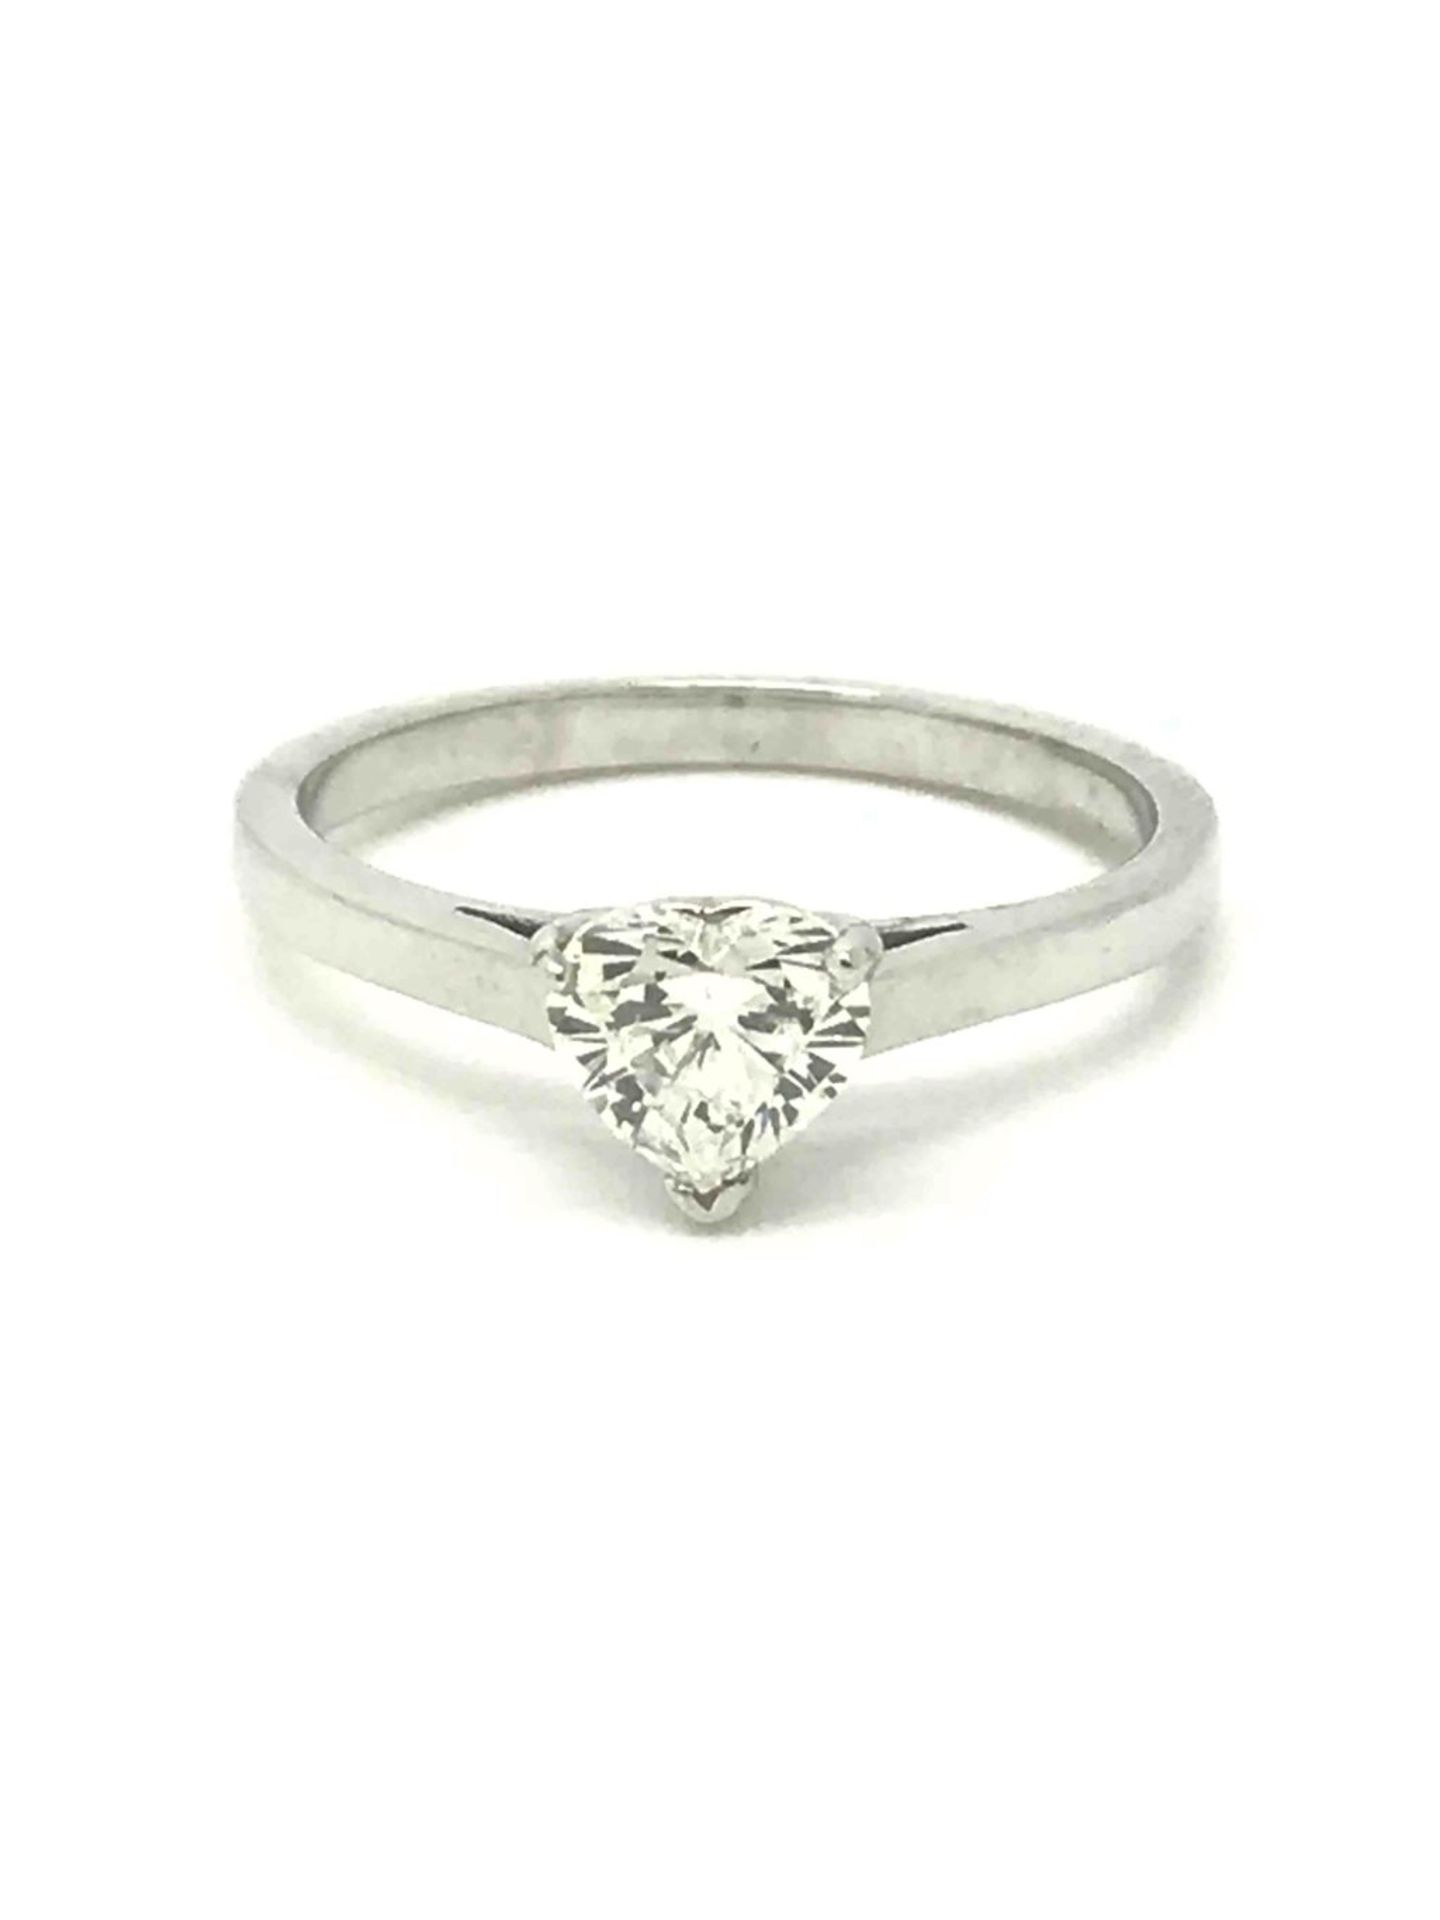 Certificated 0.72ct Heart Shaped Diamond Single Stone Ring